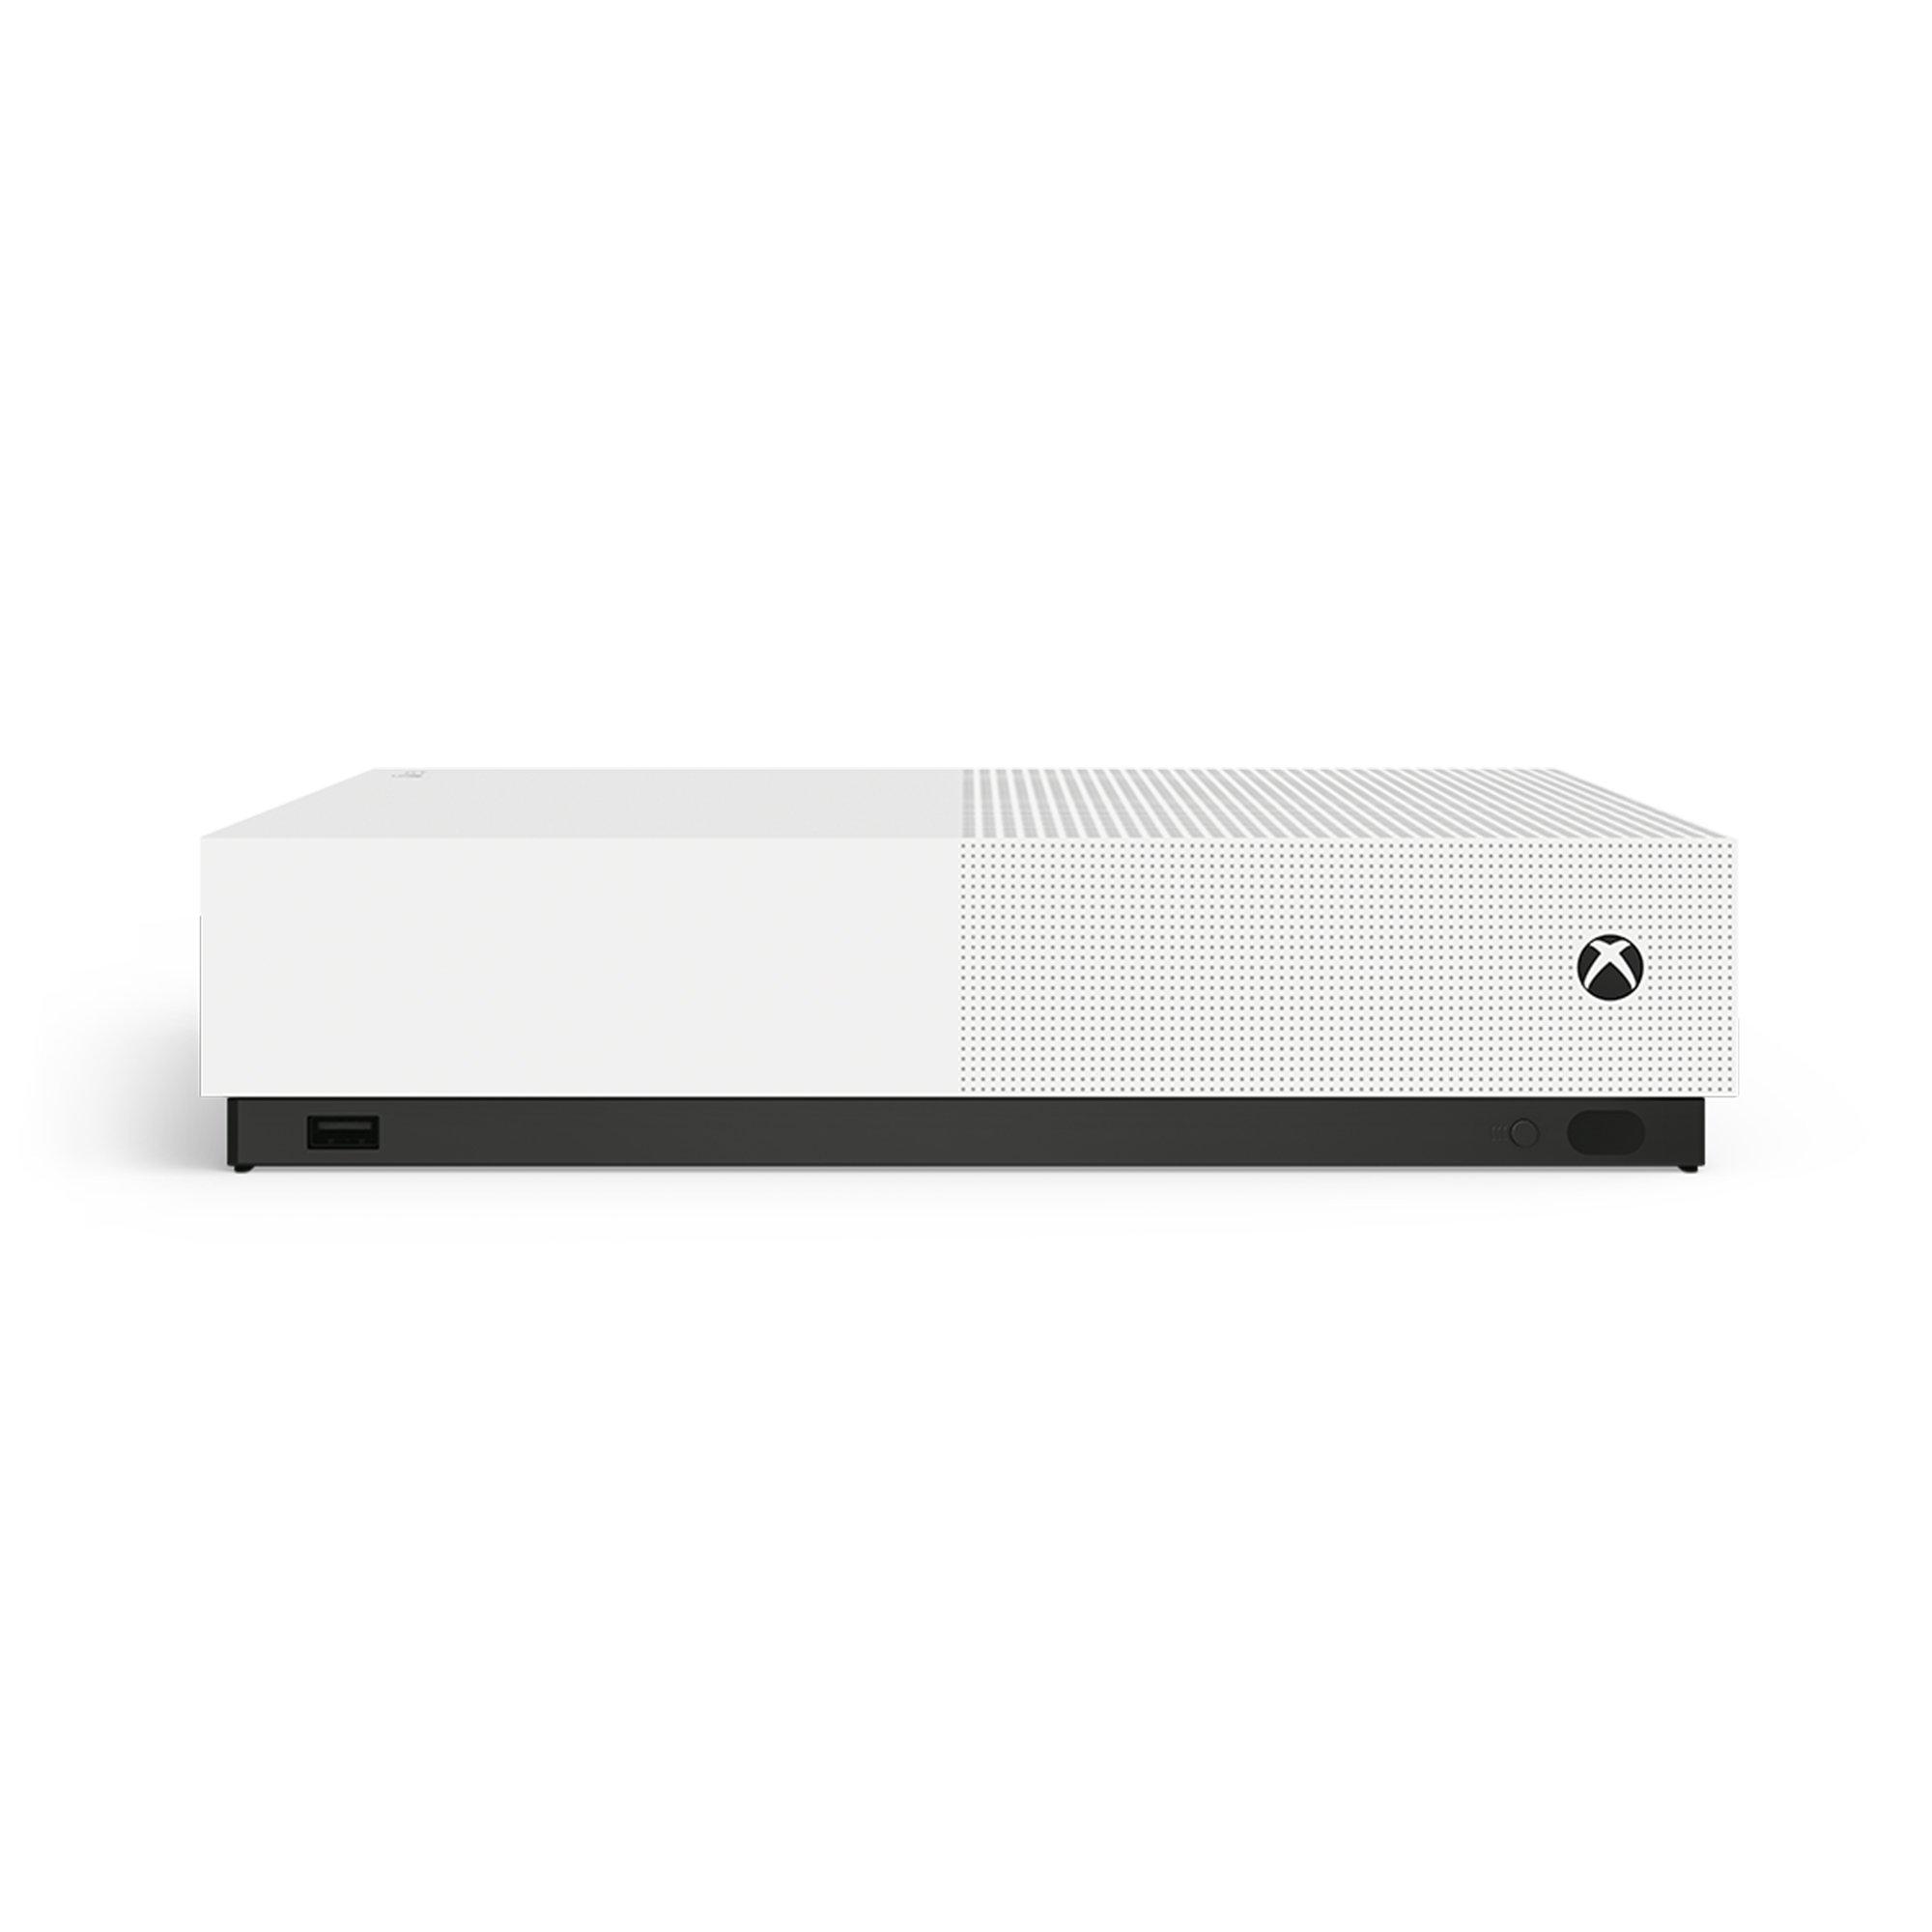 list item 2 of 6 Microsoft Xbox One S All-Digital Edition 1TB Console